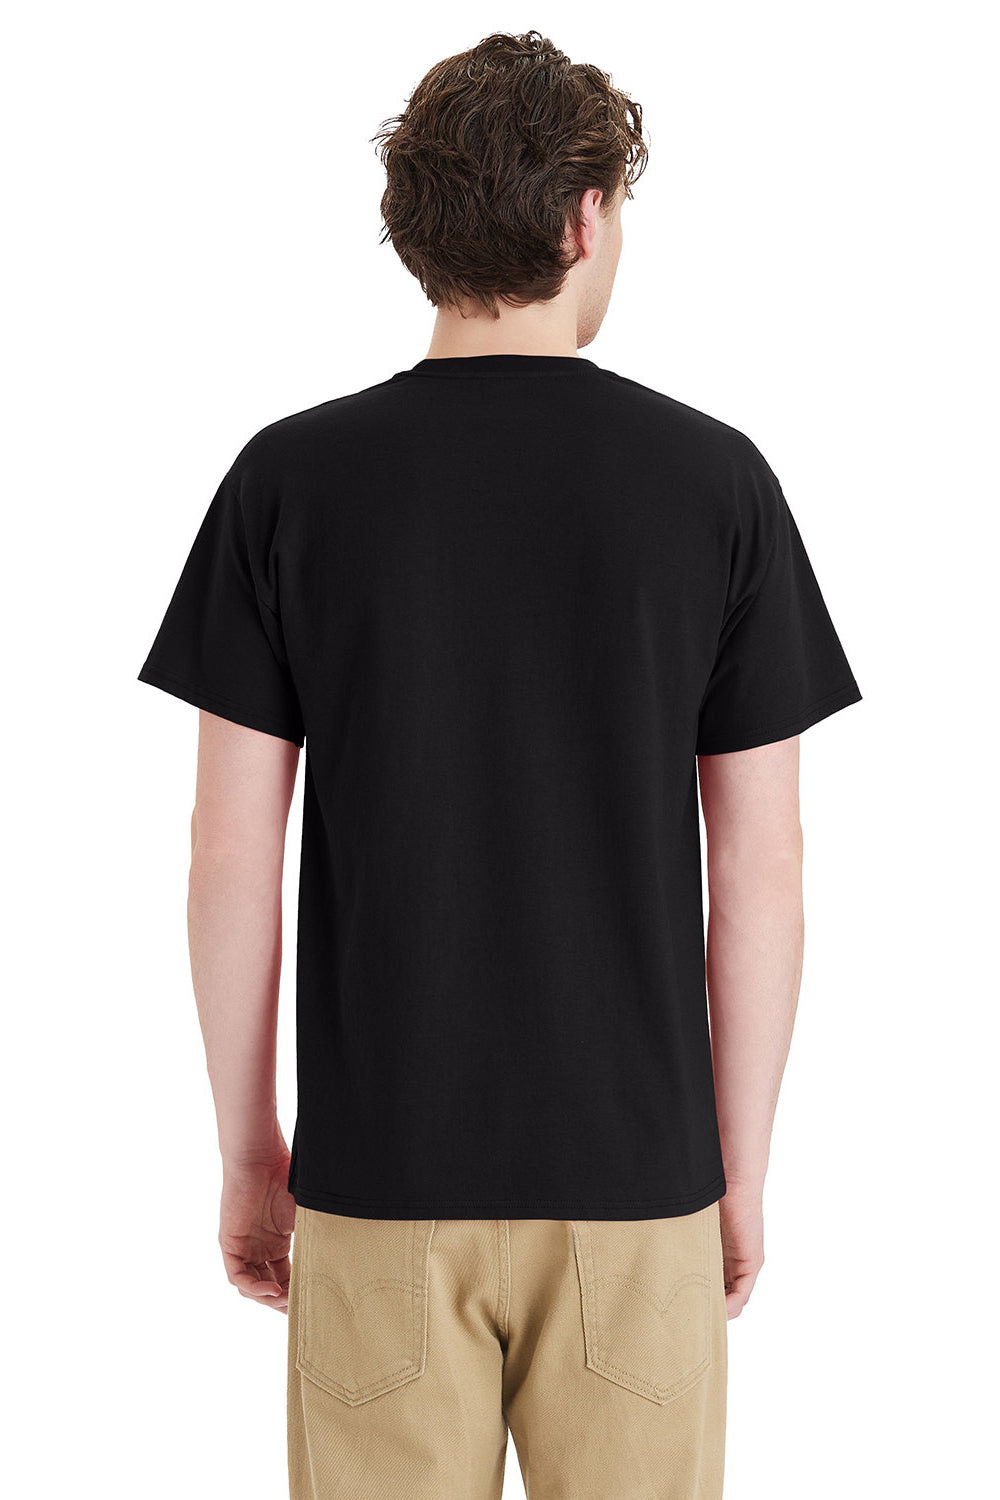 Hanes 5290P Mens Essential Short Sleeve Crewneck T-Shirt w/ Pocket Black Model Back